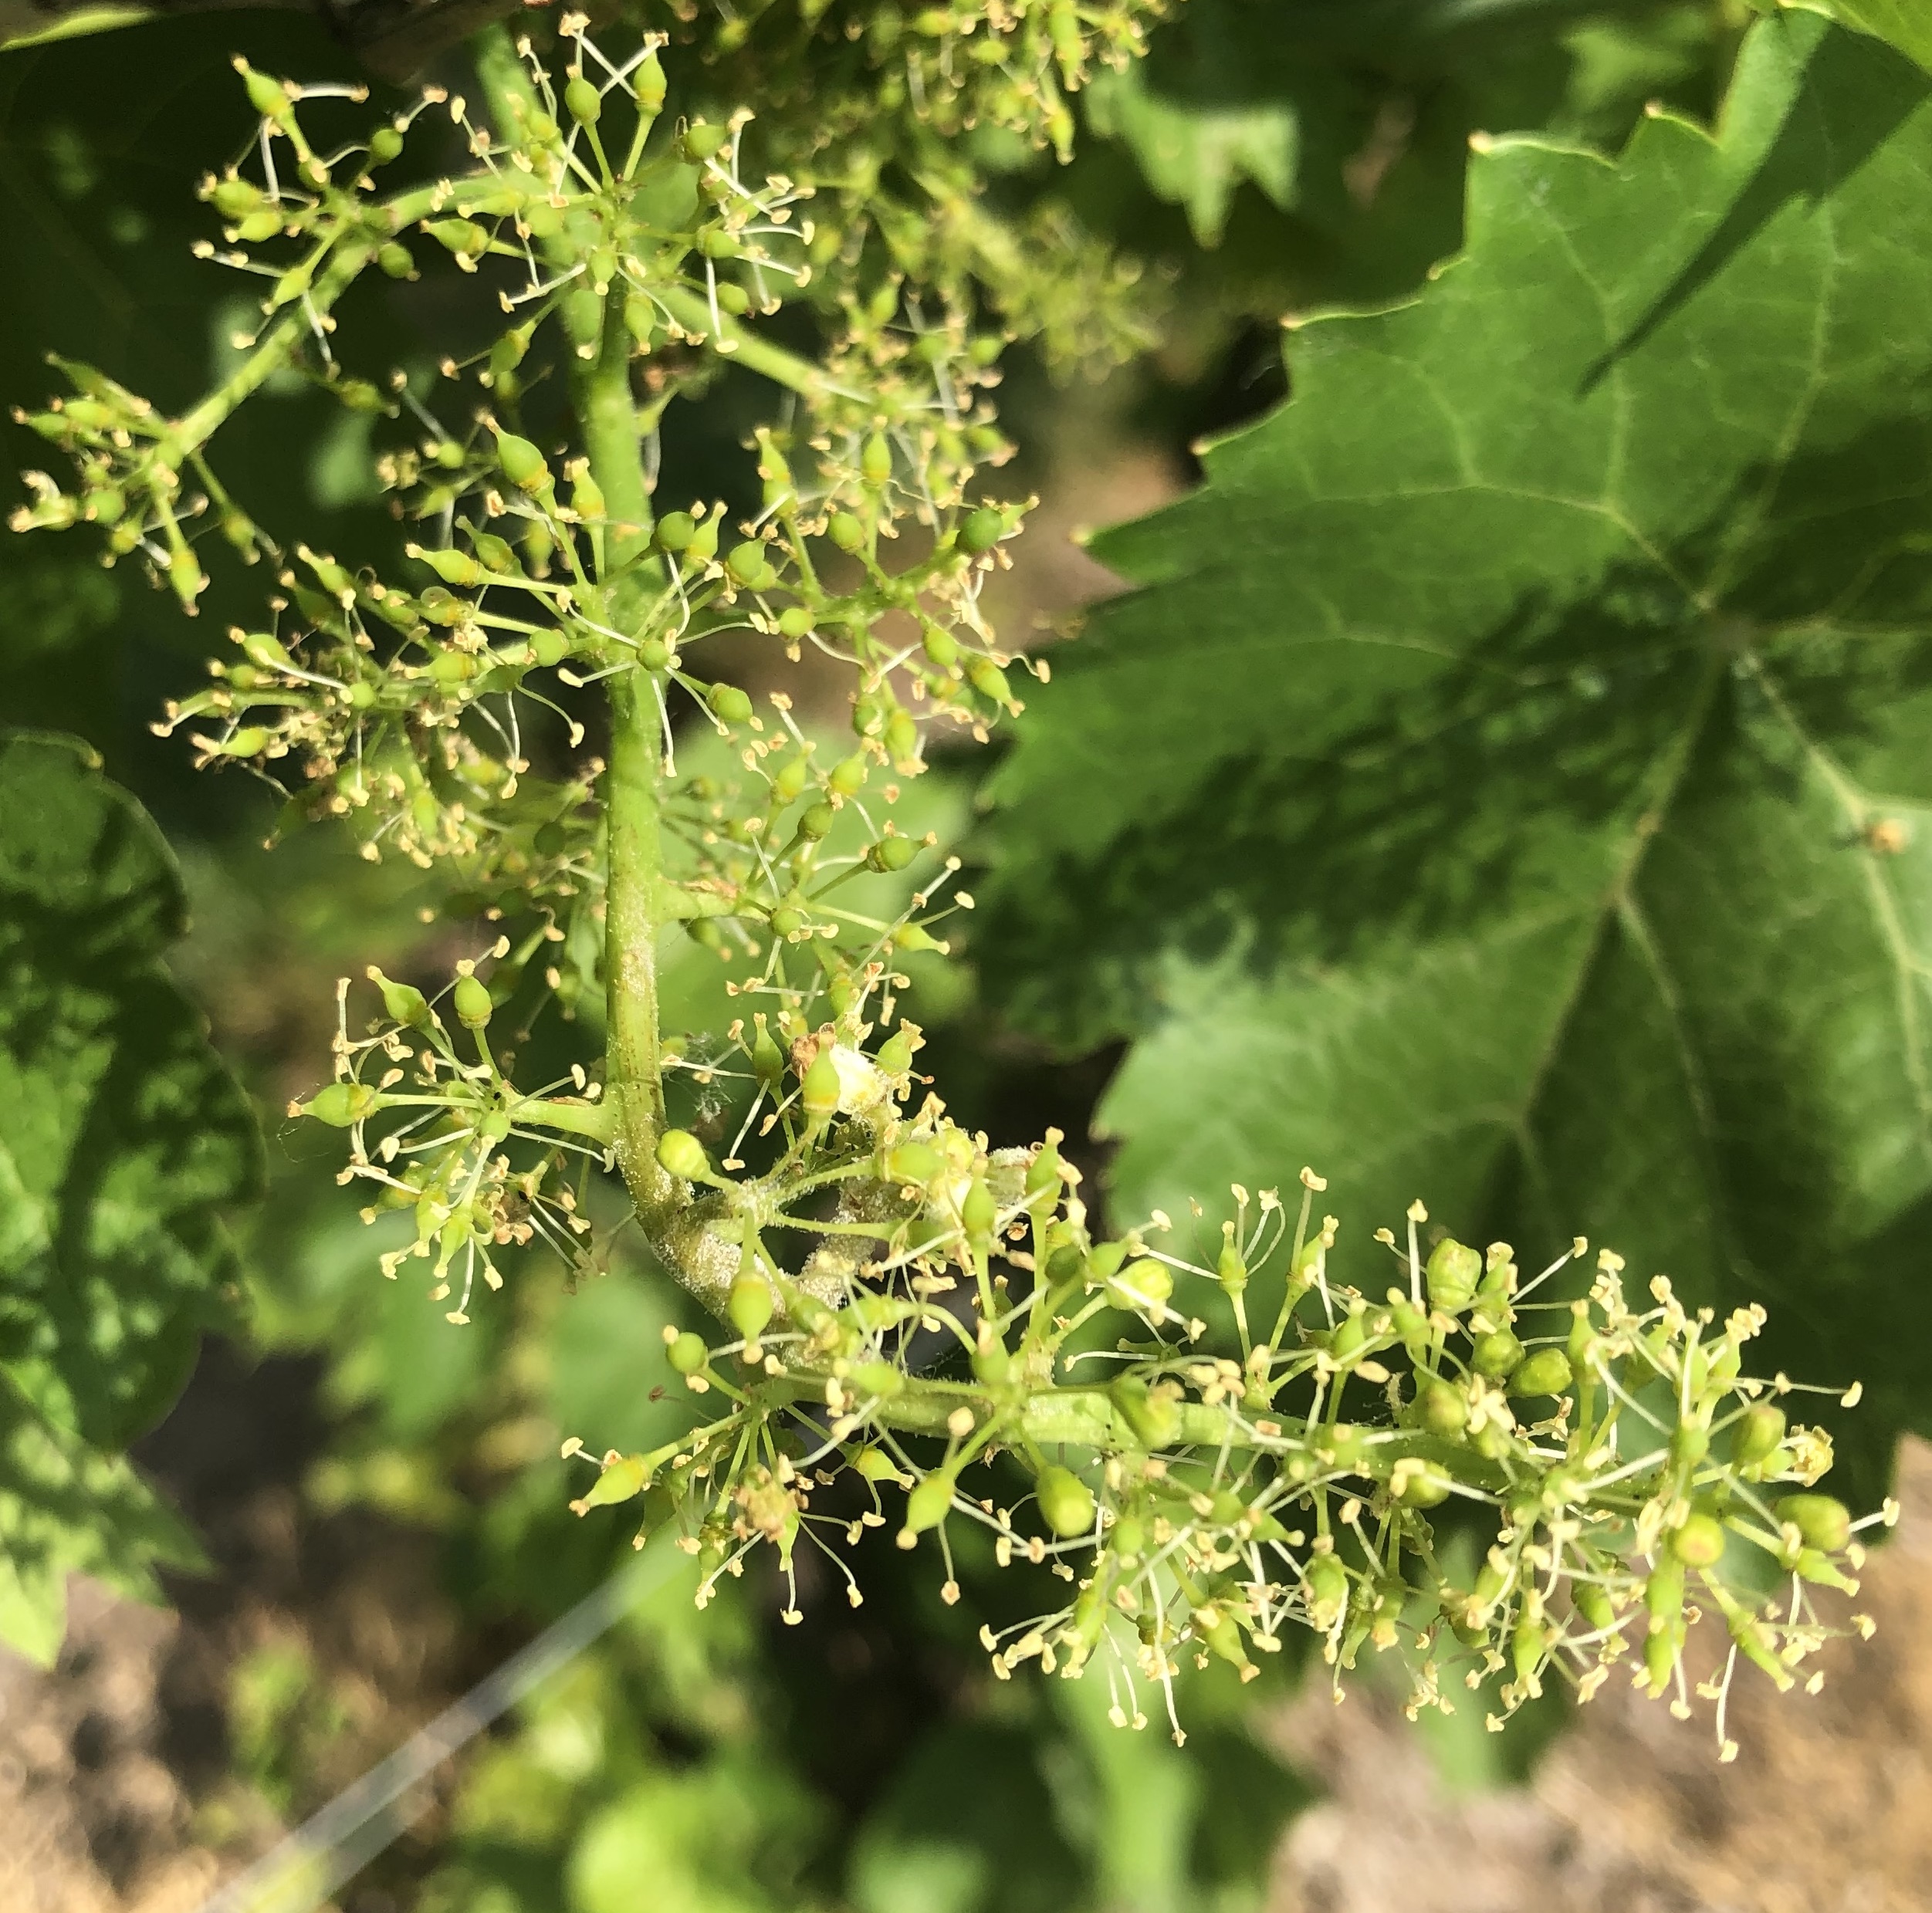 Downy mildew sporulation on hybrid wine grapes